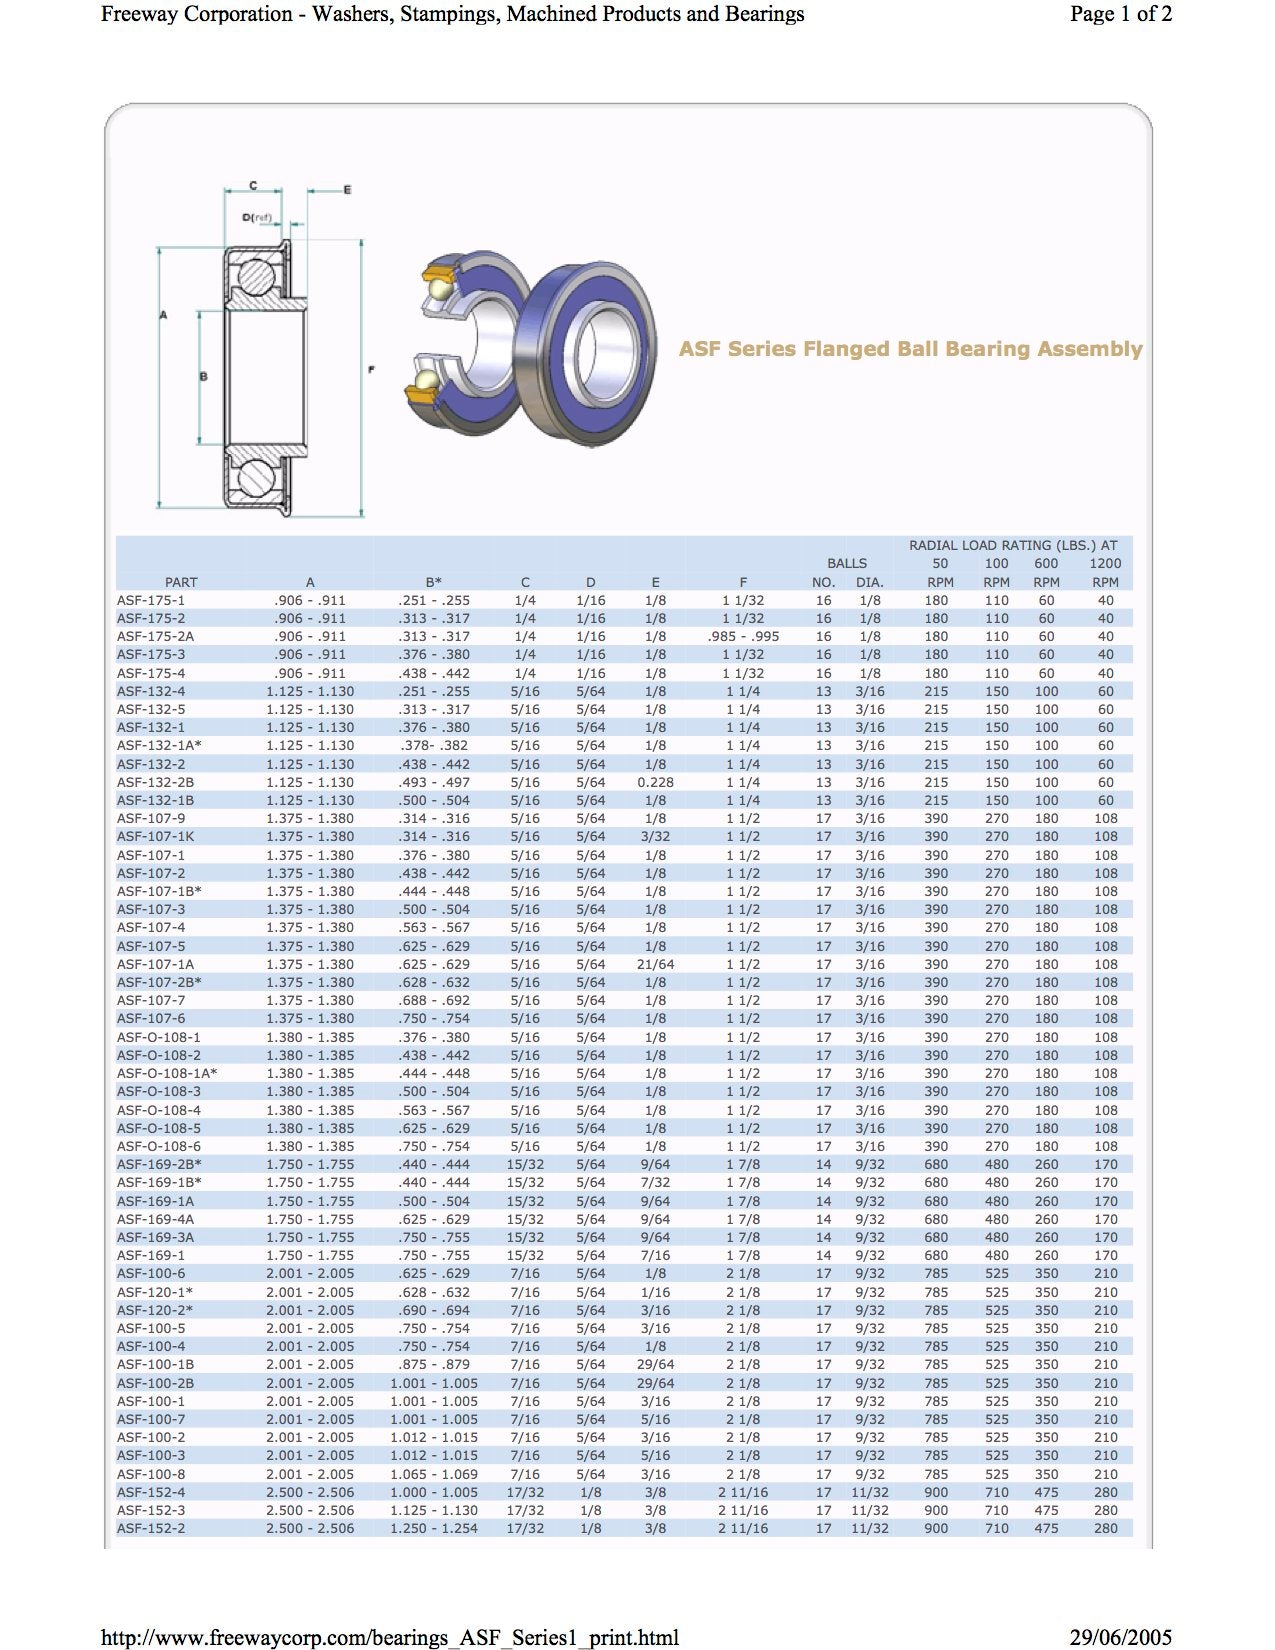 Wheel Bearing Sizes Chart Catalog